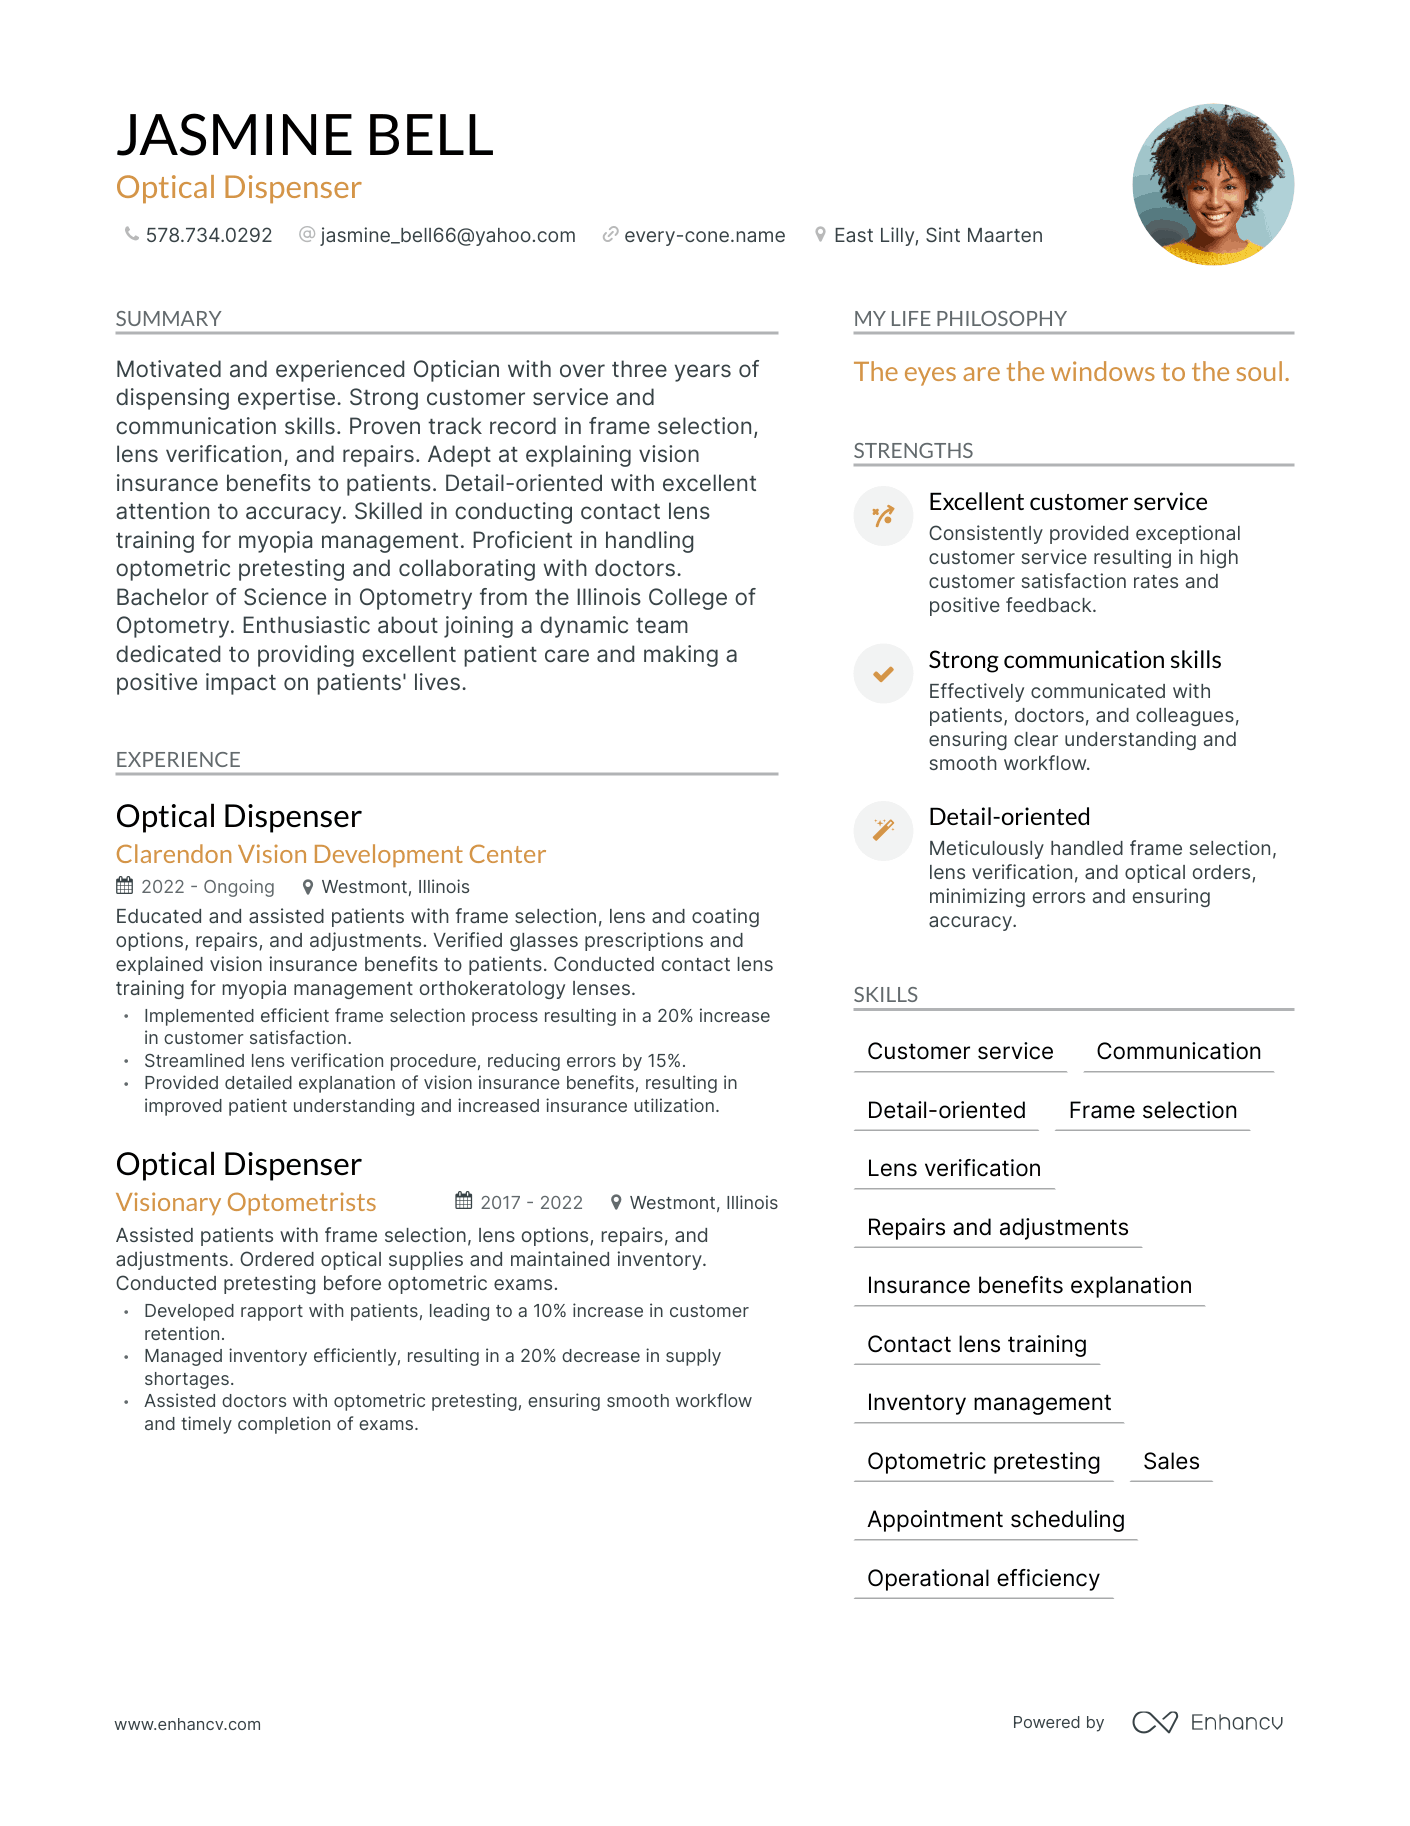 Optical Dispenser resume example